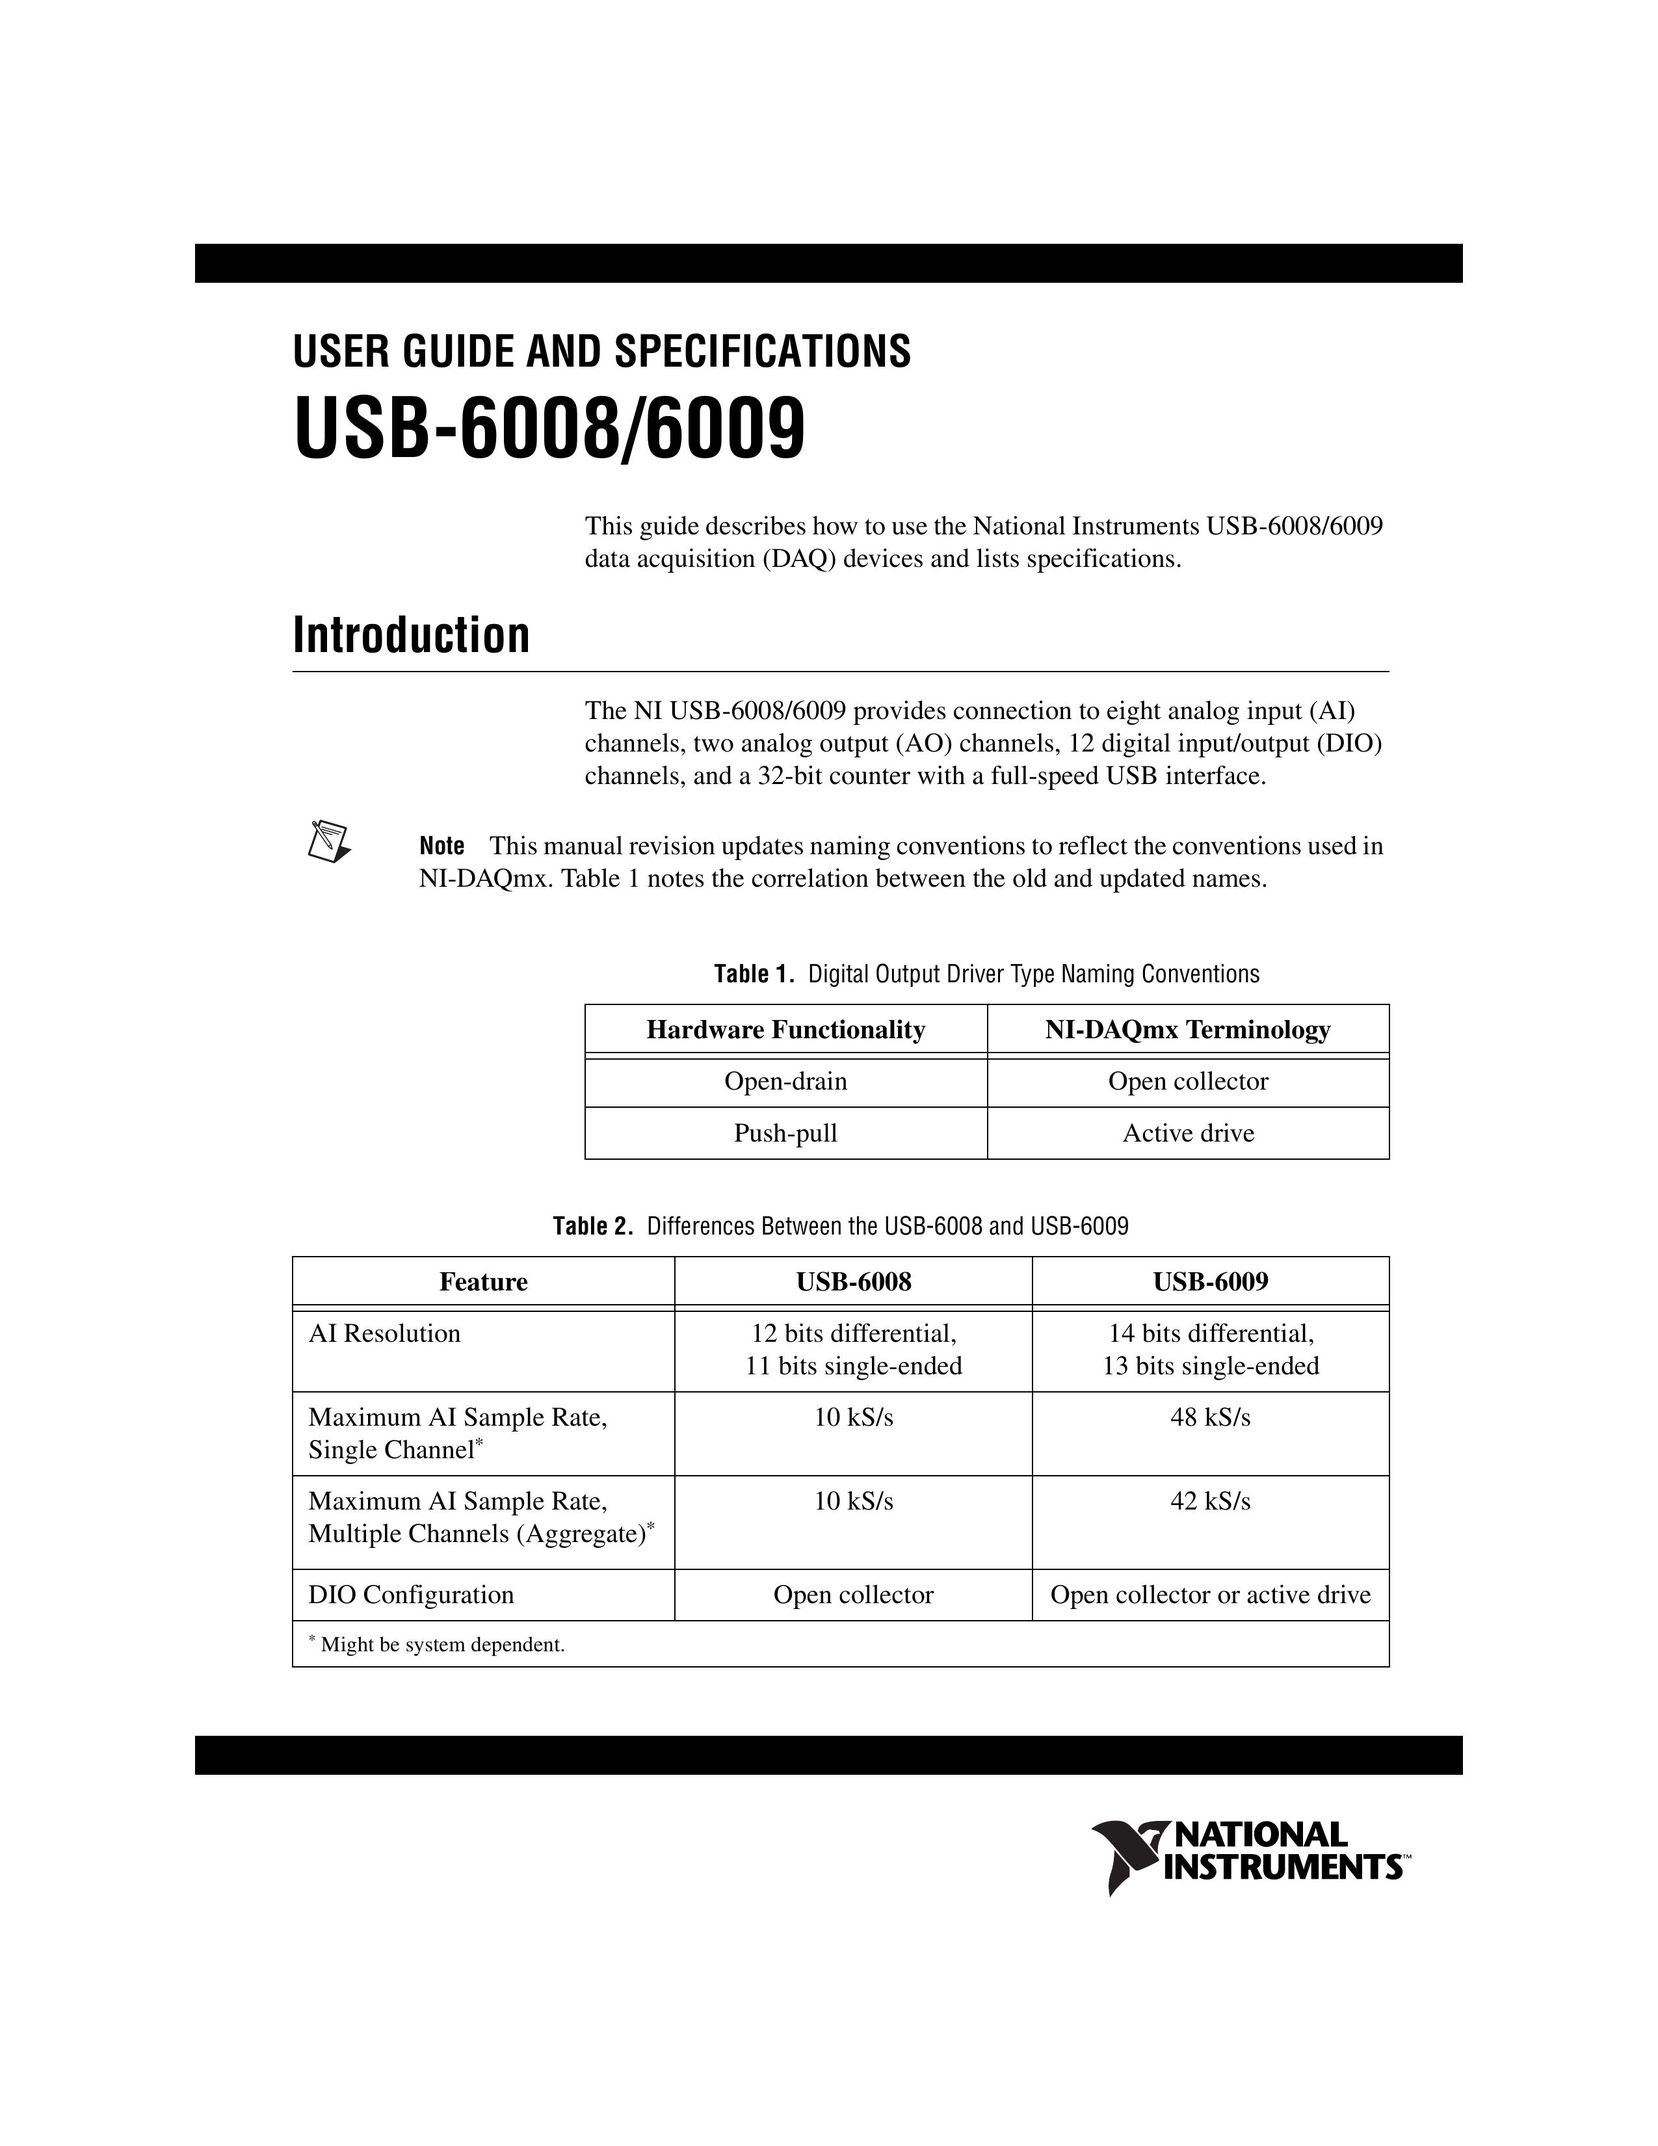 National Instruments USB-6008/6009 Computer Drive User Manual